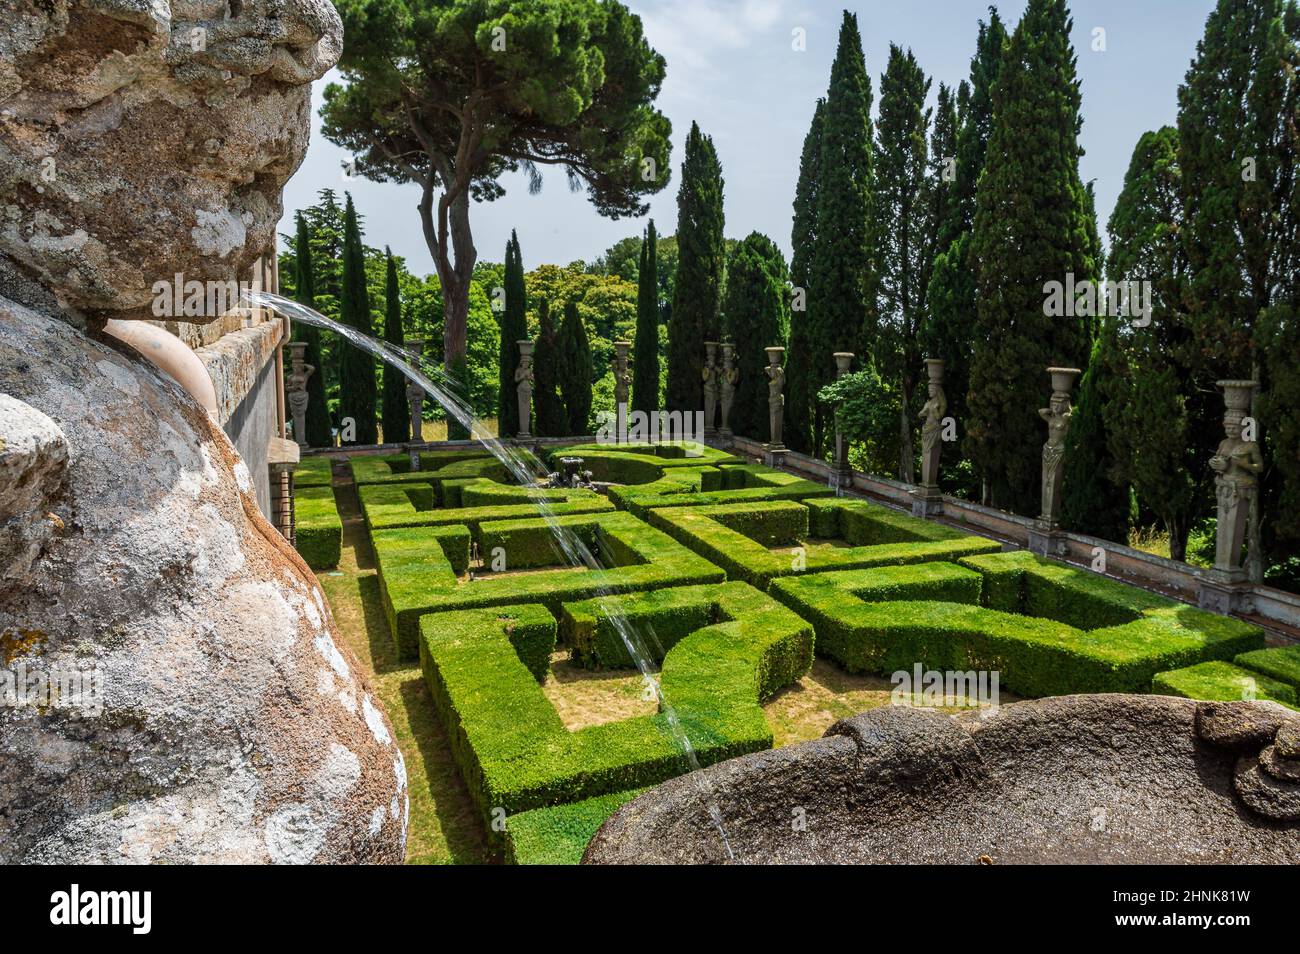 Fontana nei Giardini di Villa Farnese Foto Stock